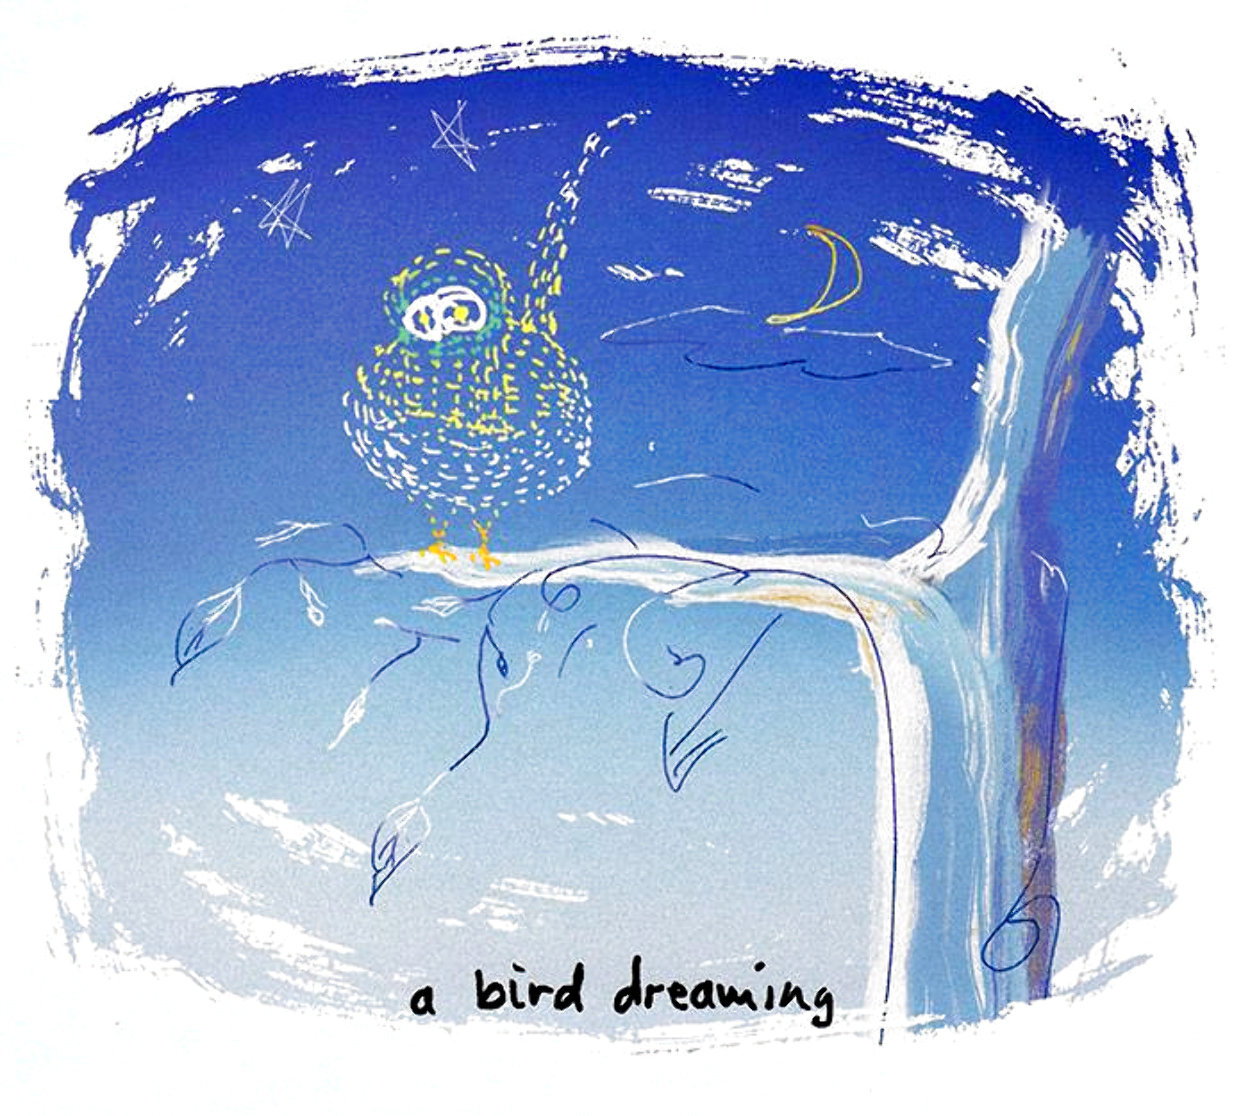 Bird Dreaming AP 1995 Limited Edition Print by John Lennon